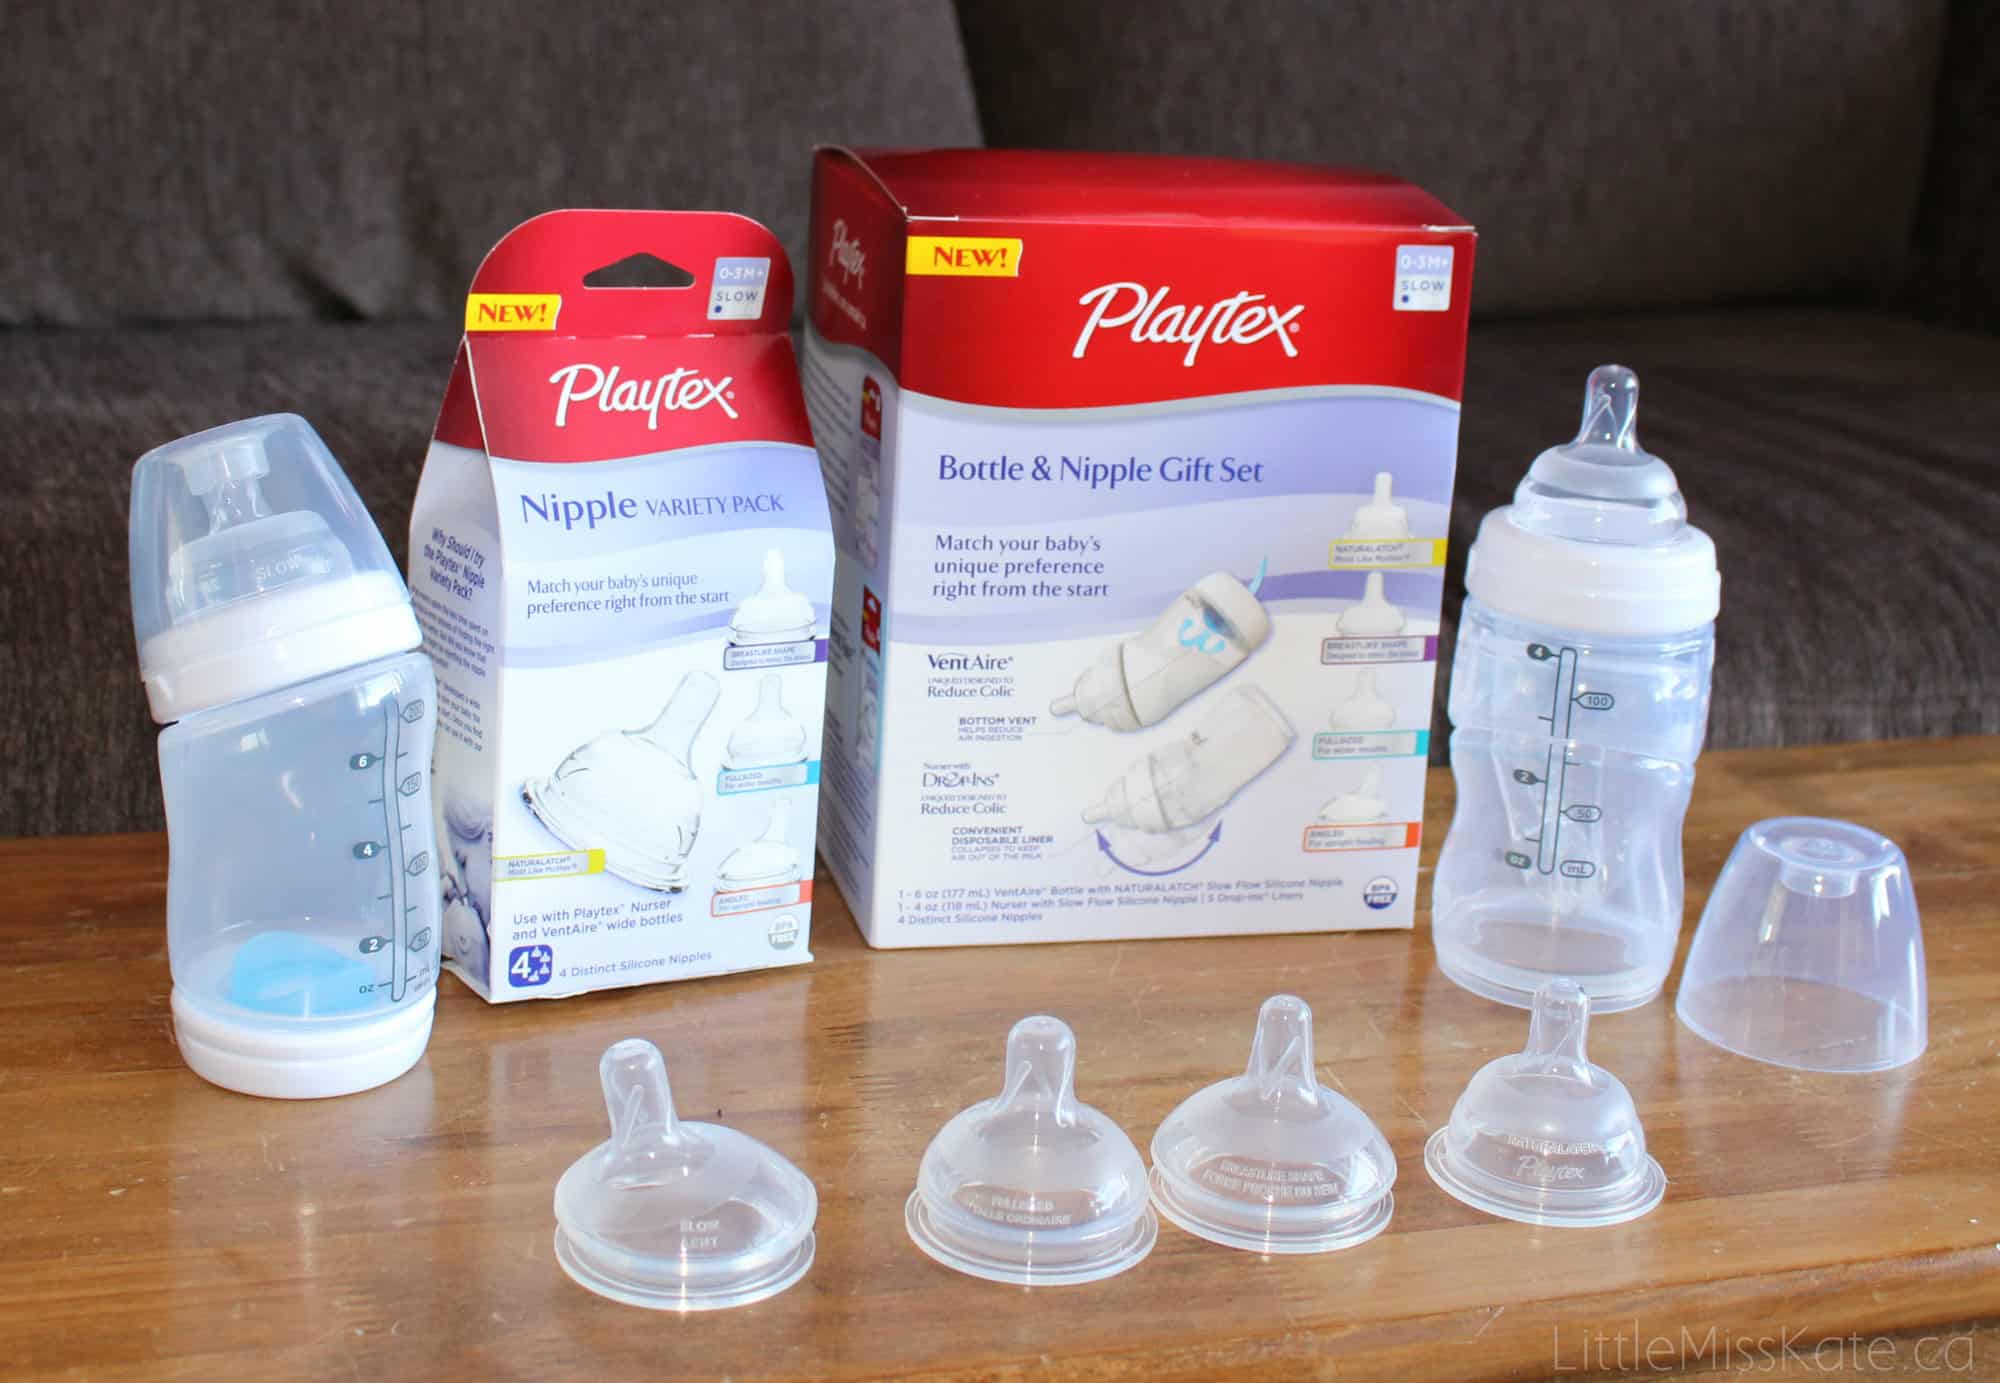 Playtex-bottle-and-nipple-gift-set.jpg